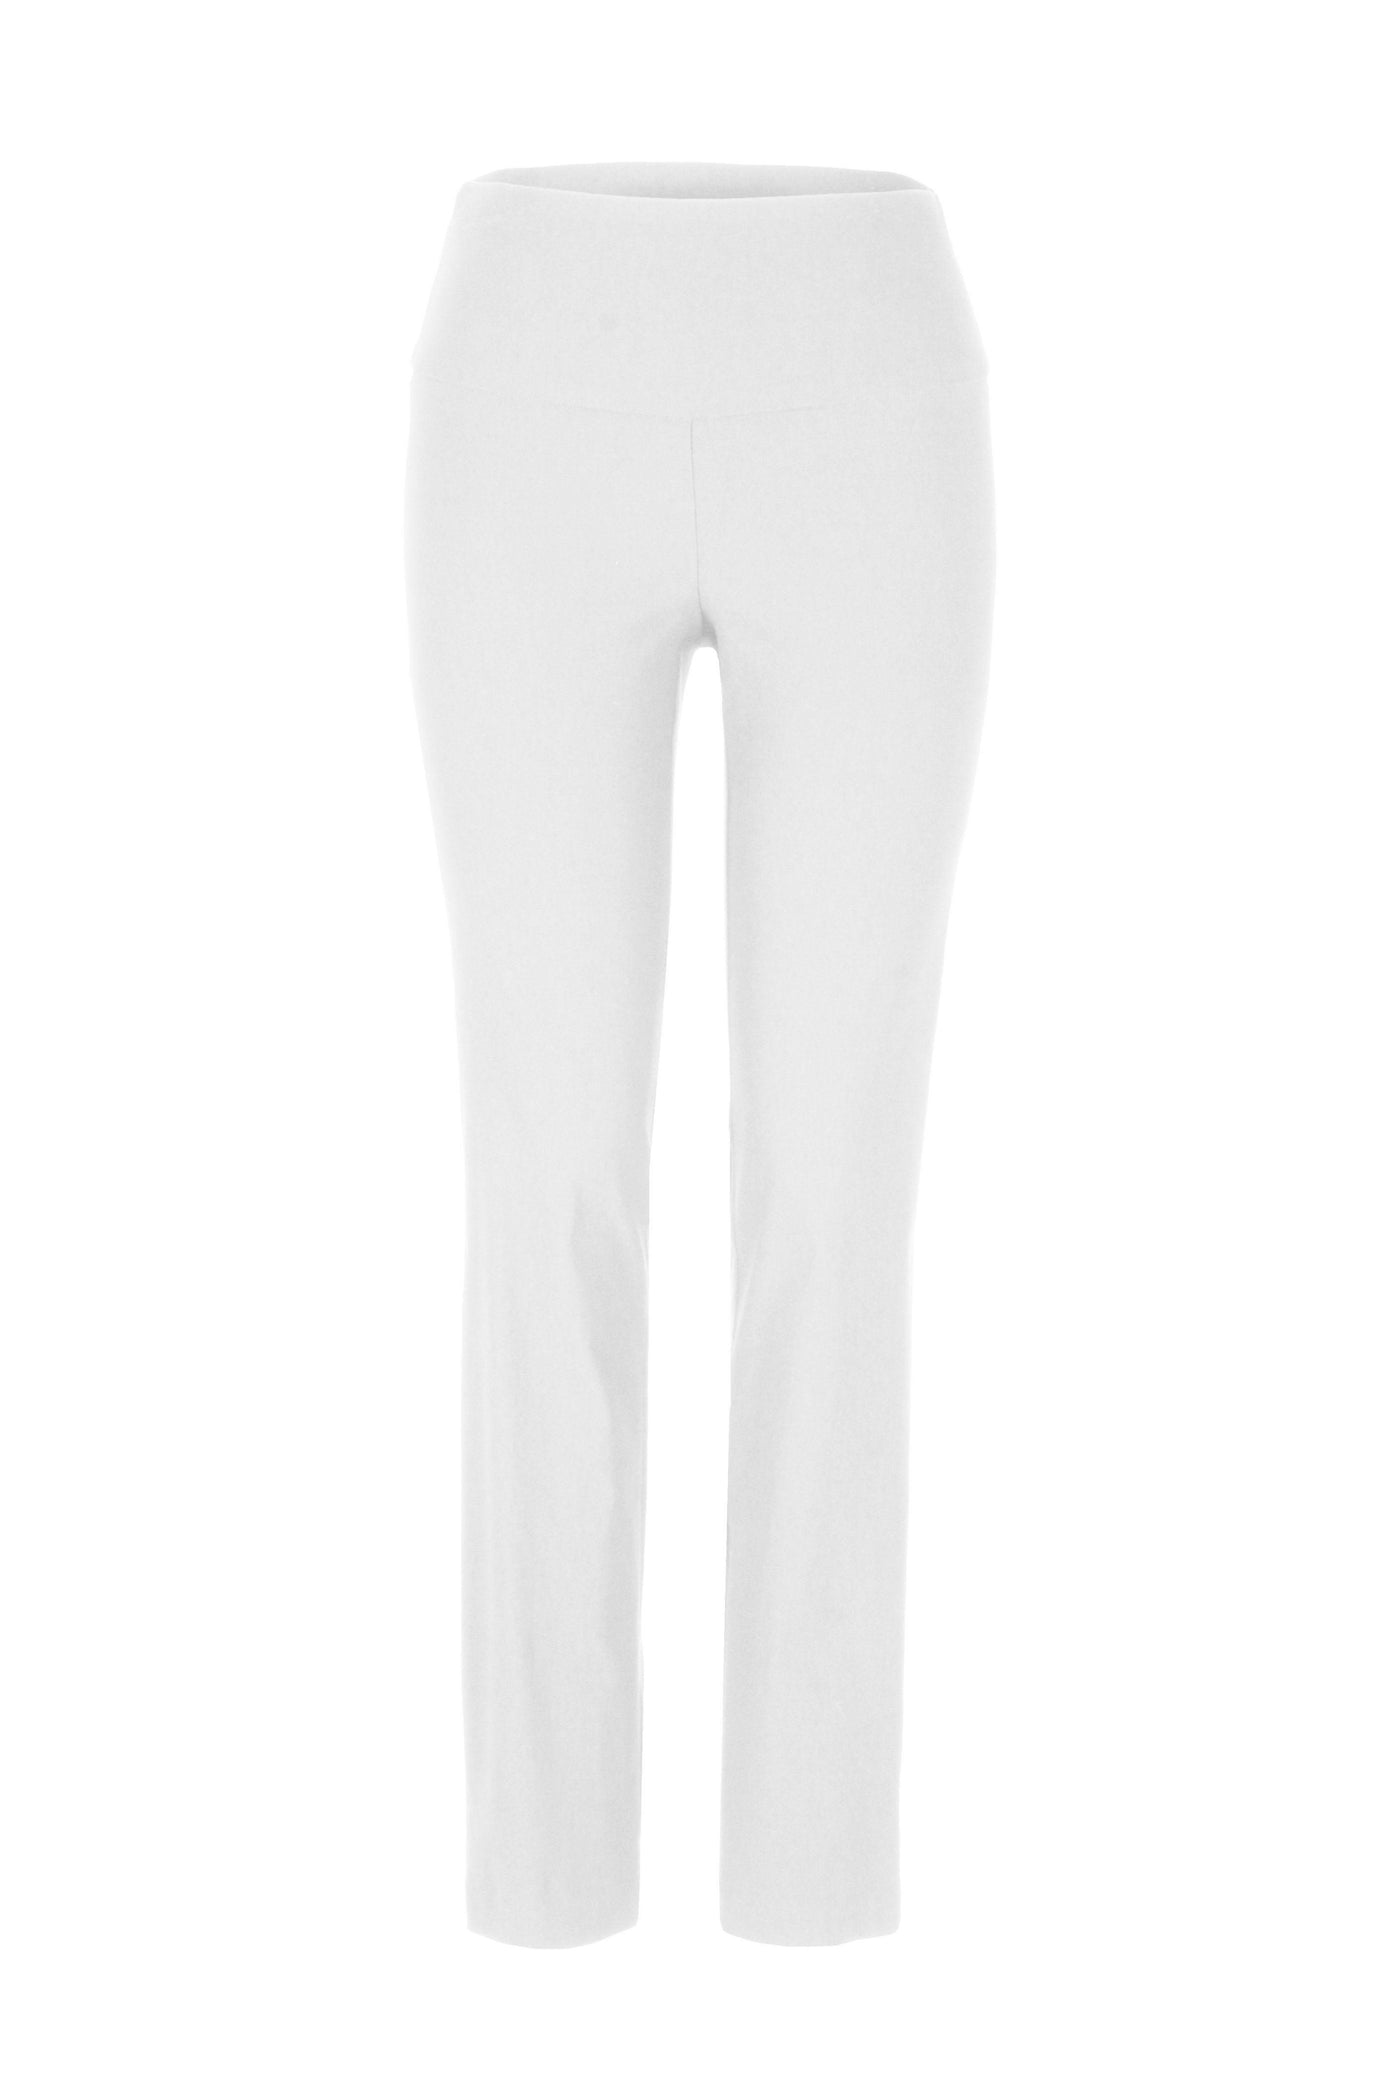 Pant - Illusion 31 Inch Pant (White) - The Wardrobe